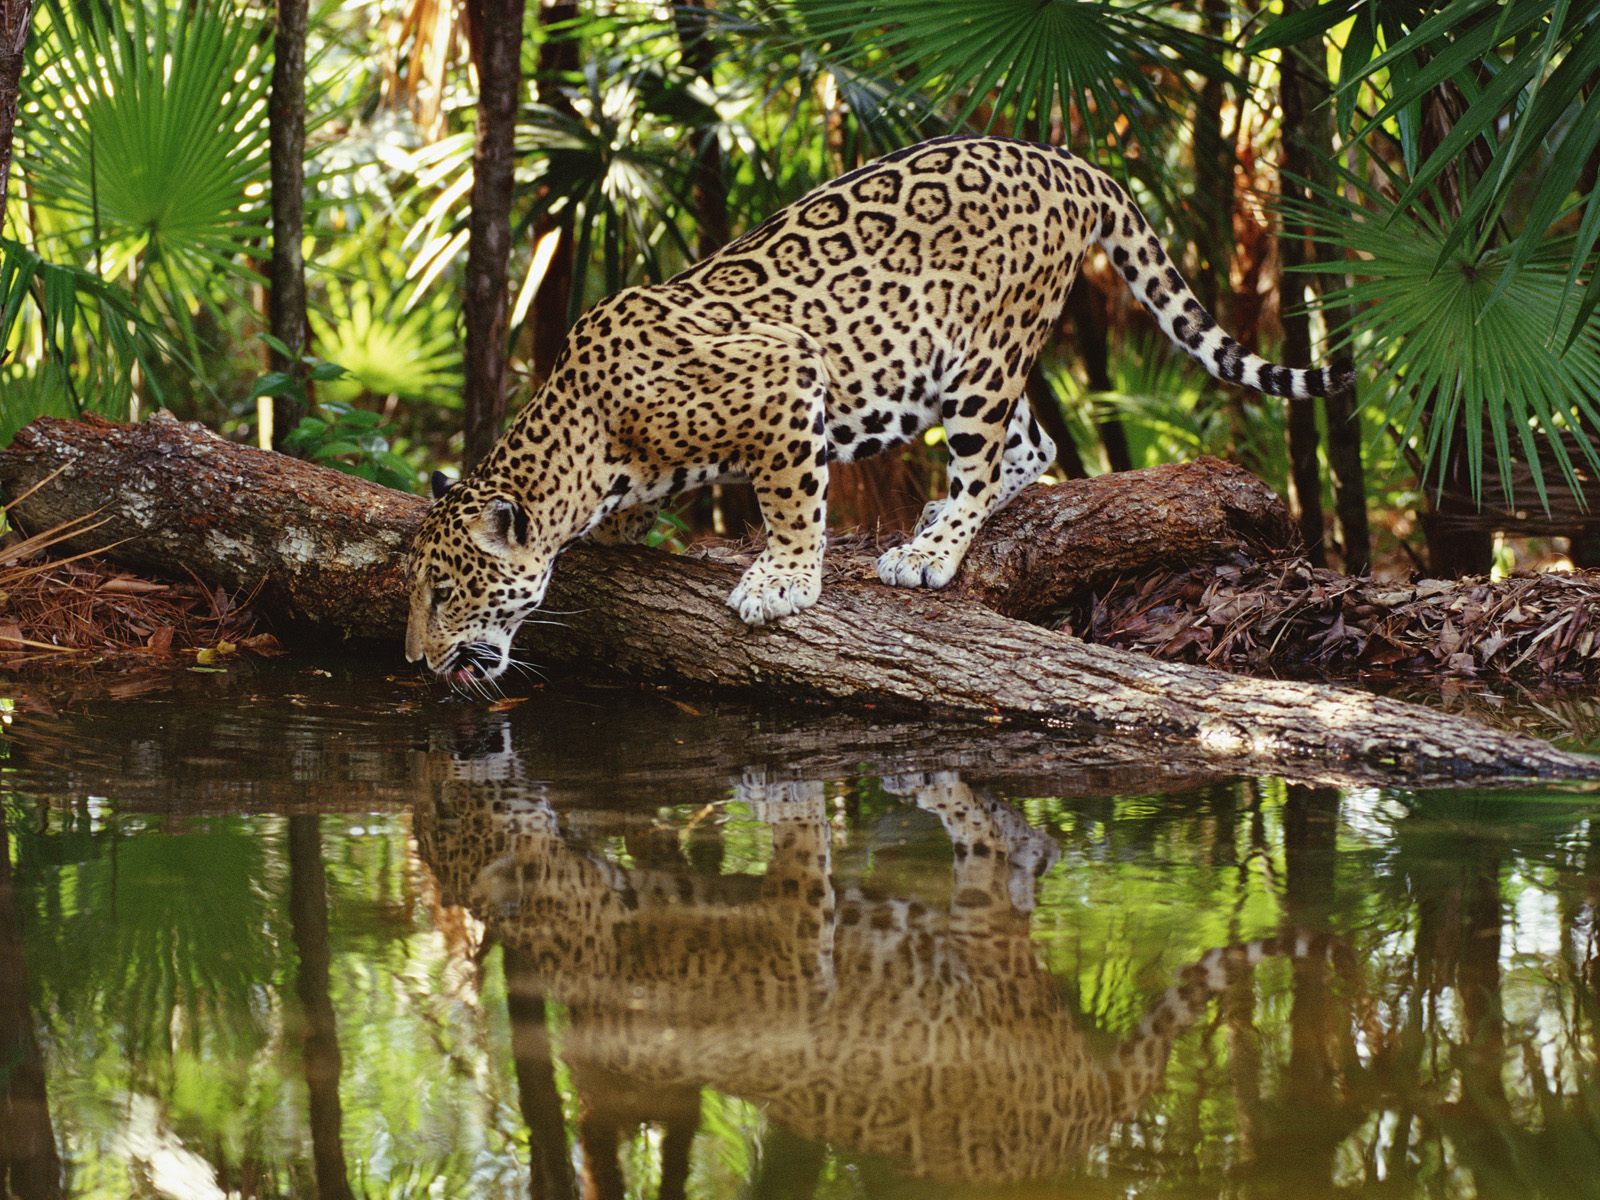 Jaguar | HD Wallpapers (High Definition)|HDwalle